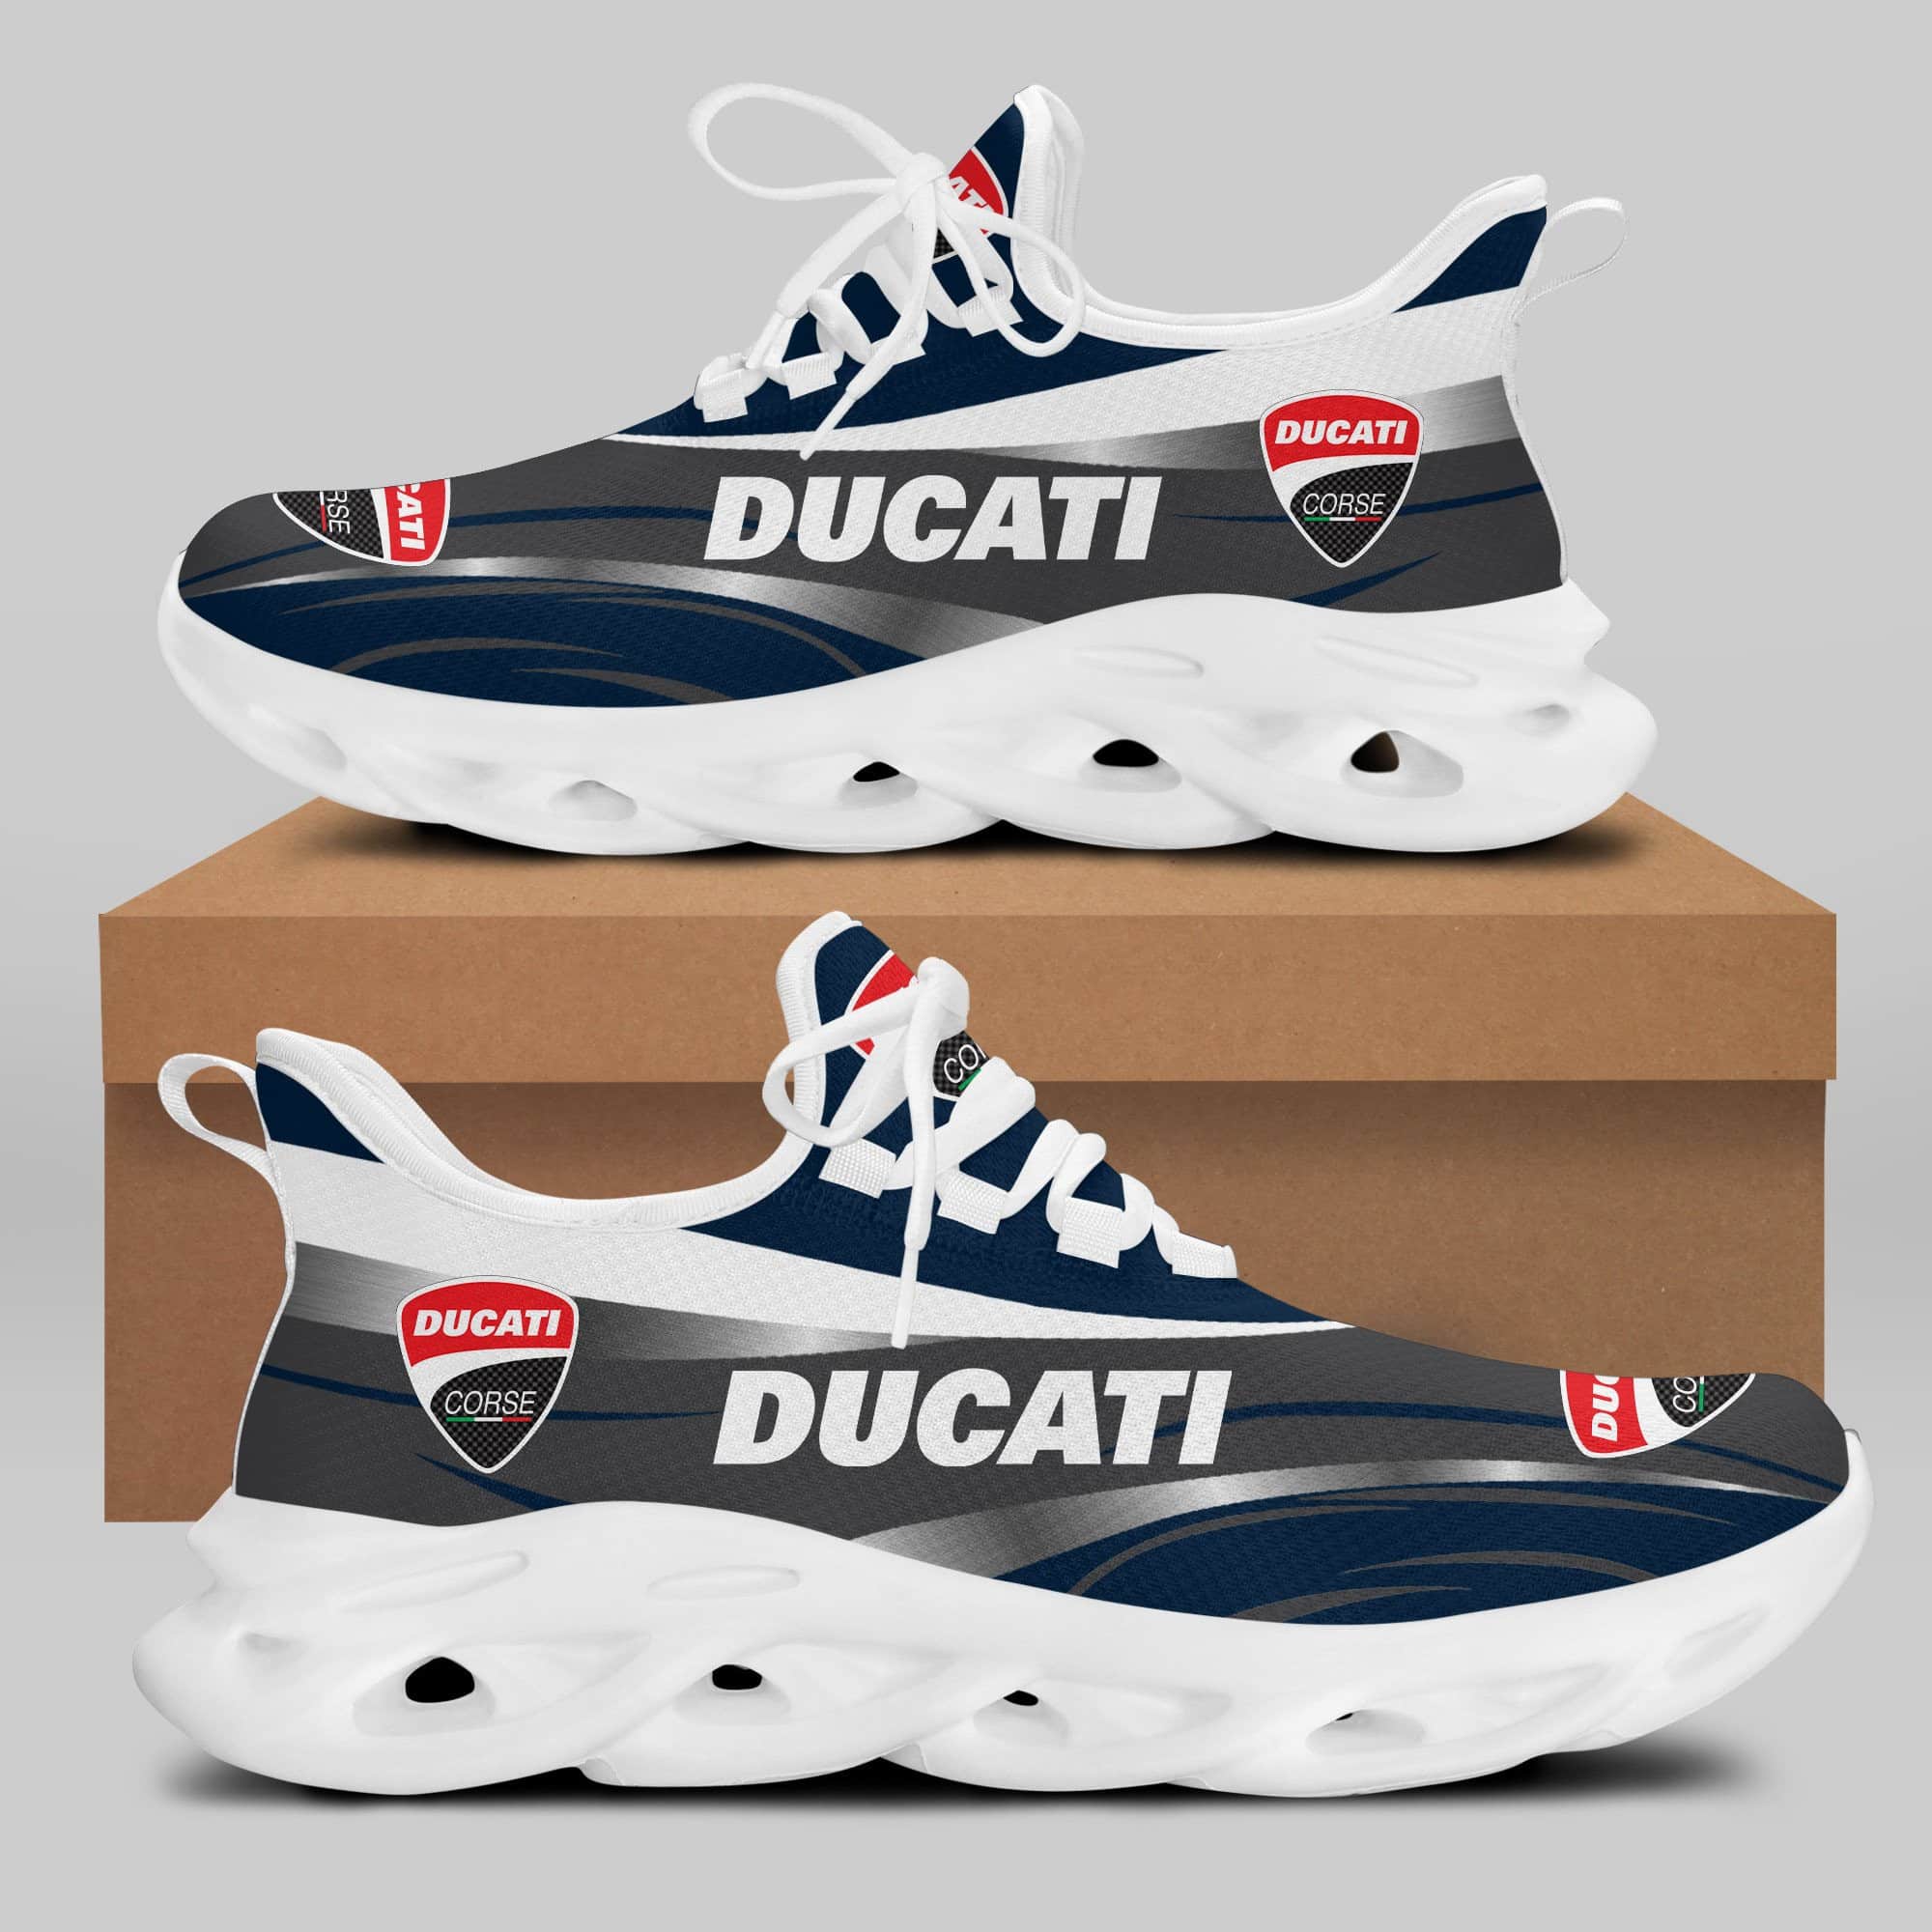 Ducati Racing Running Shoes Max Soul Shoes Sneakers Ver 55 1